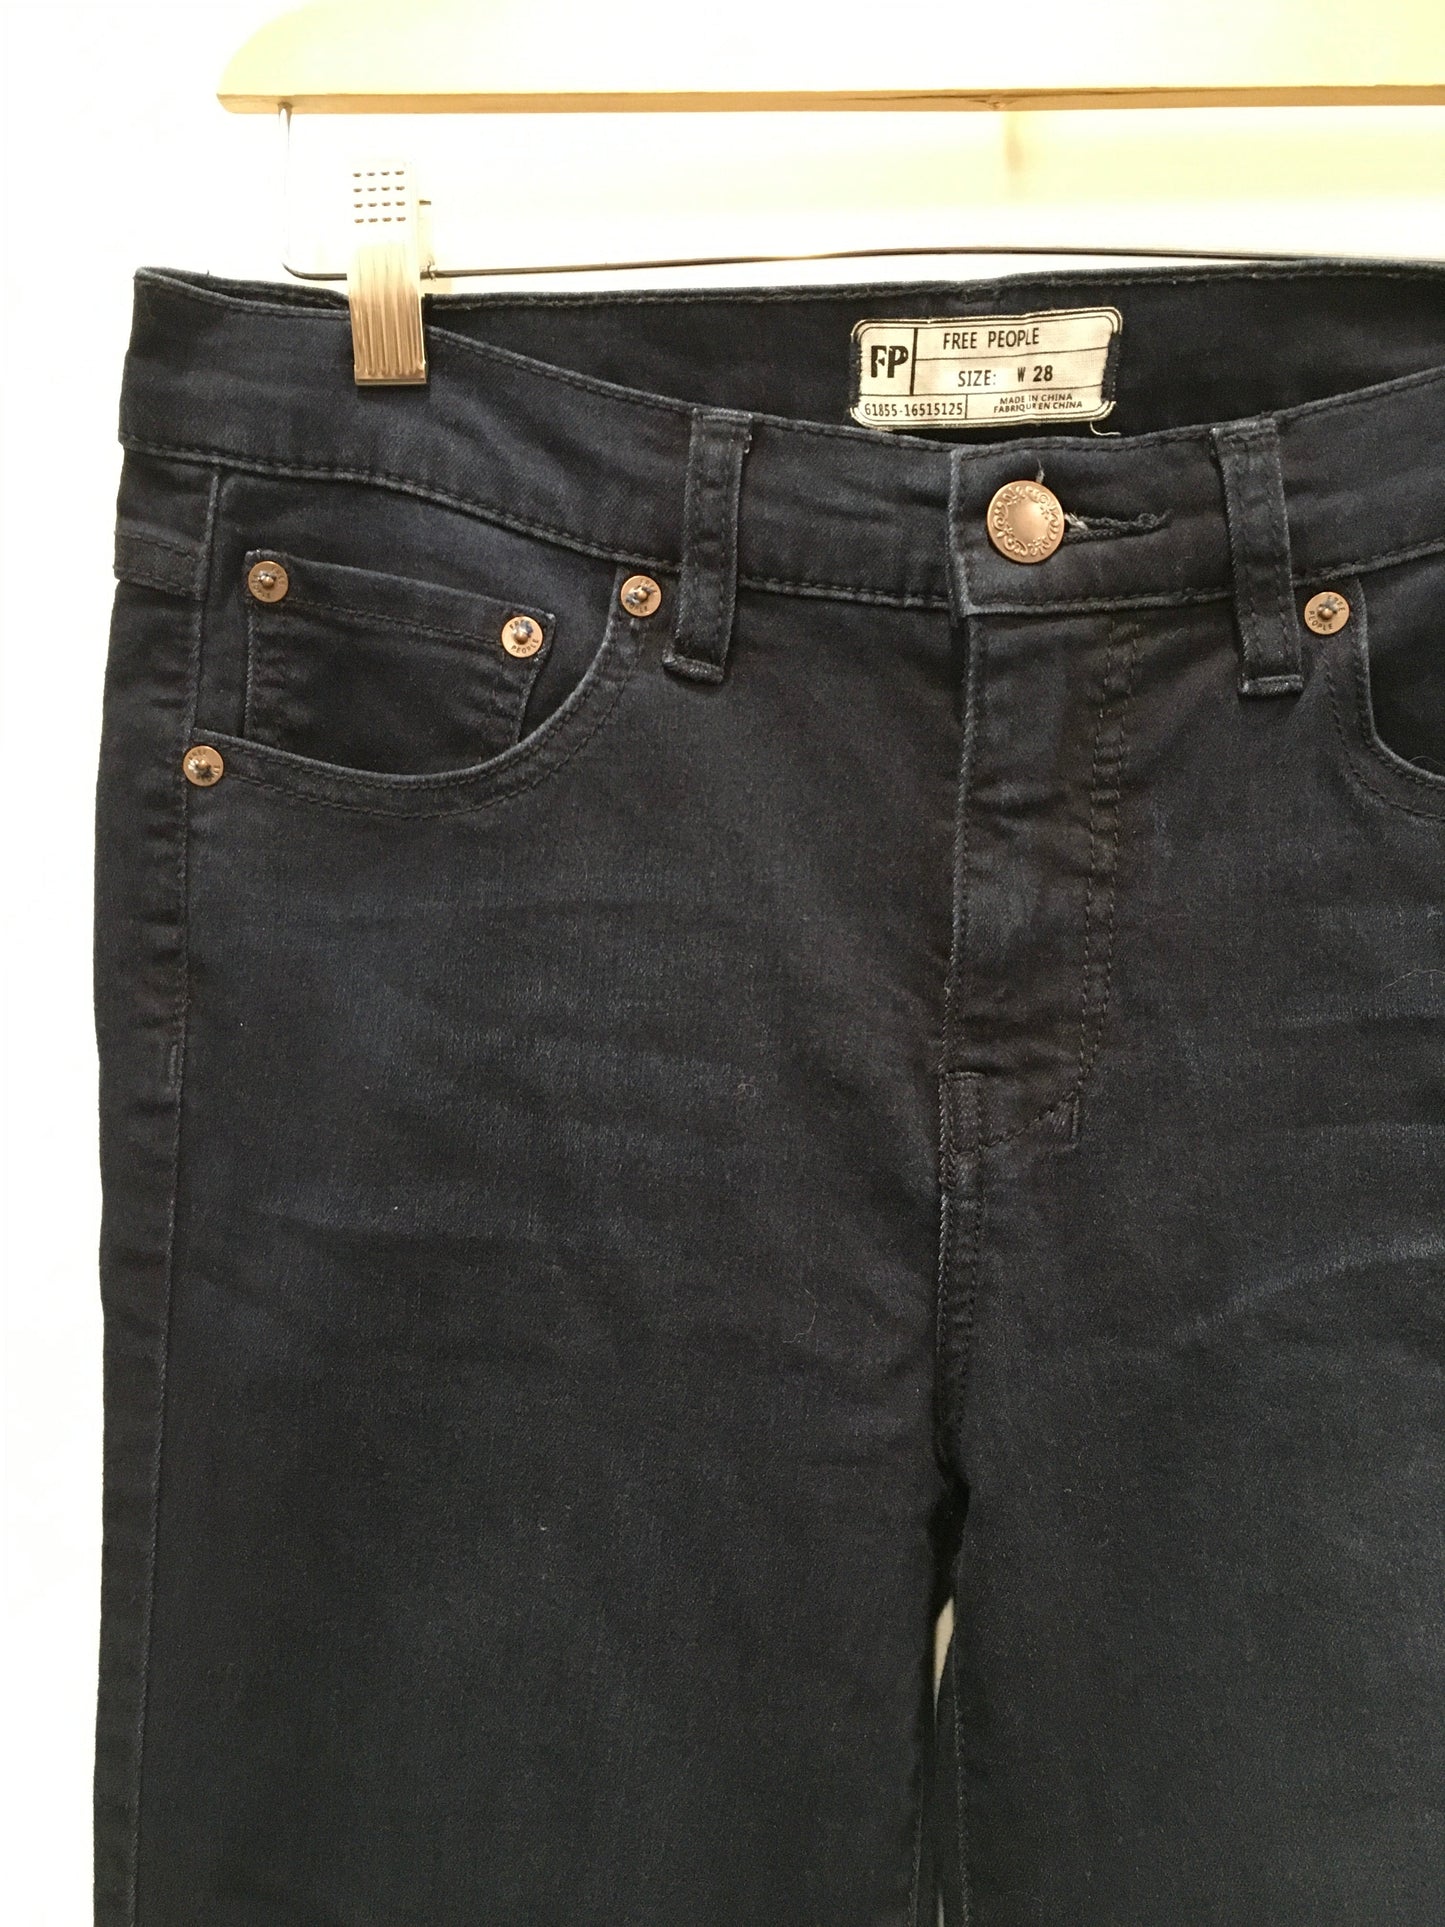 Blue Denim Jeans Flared Free People, Size 6